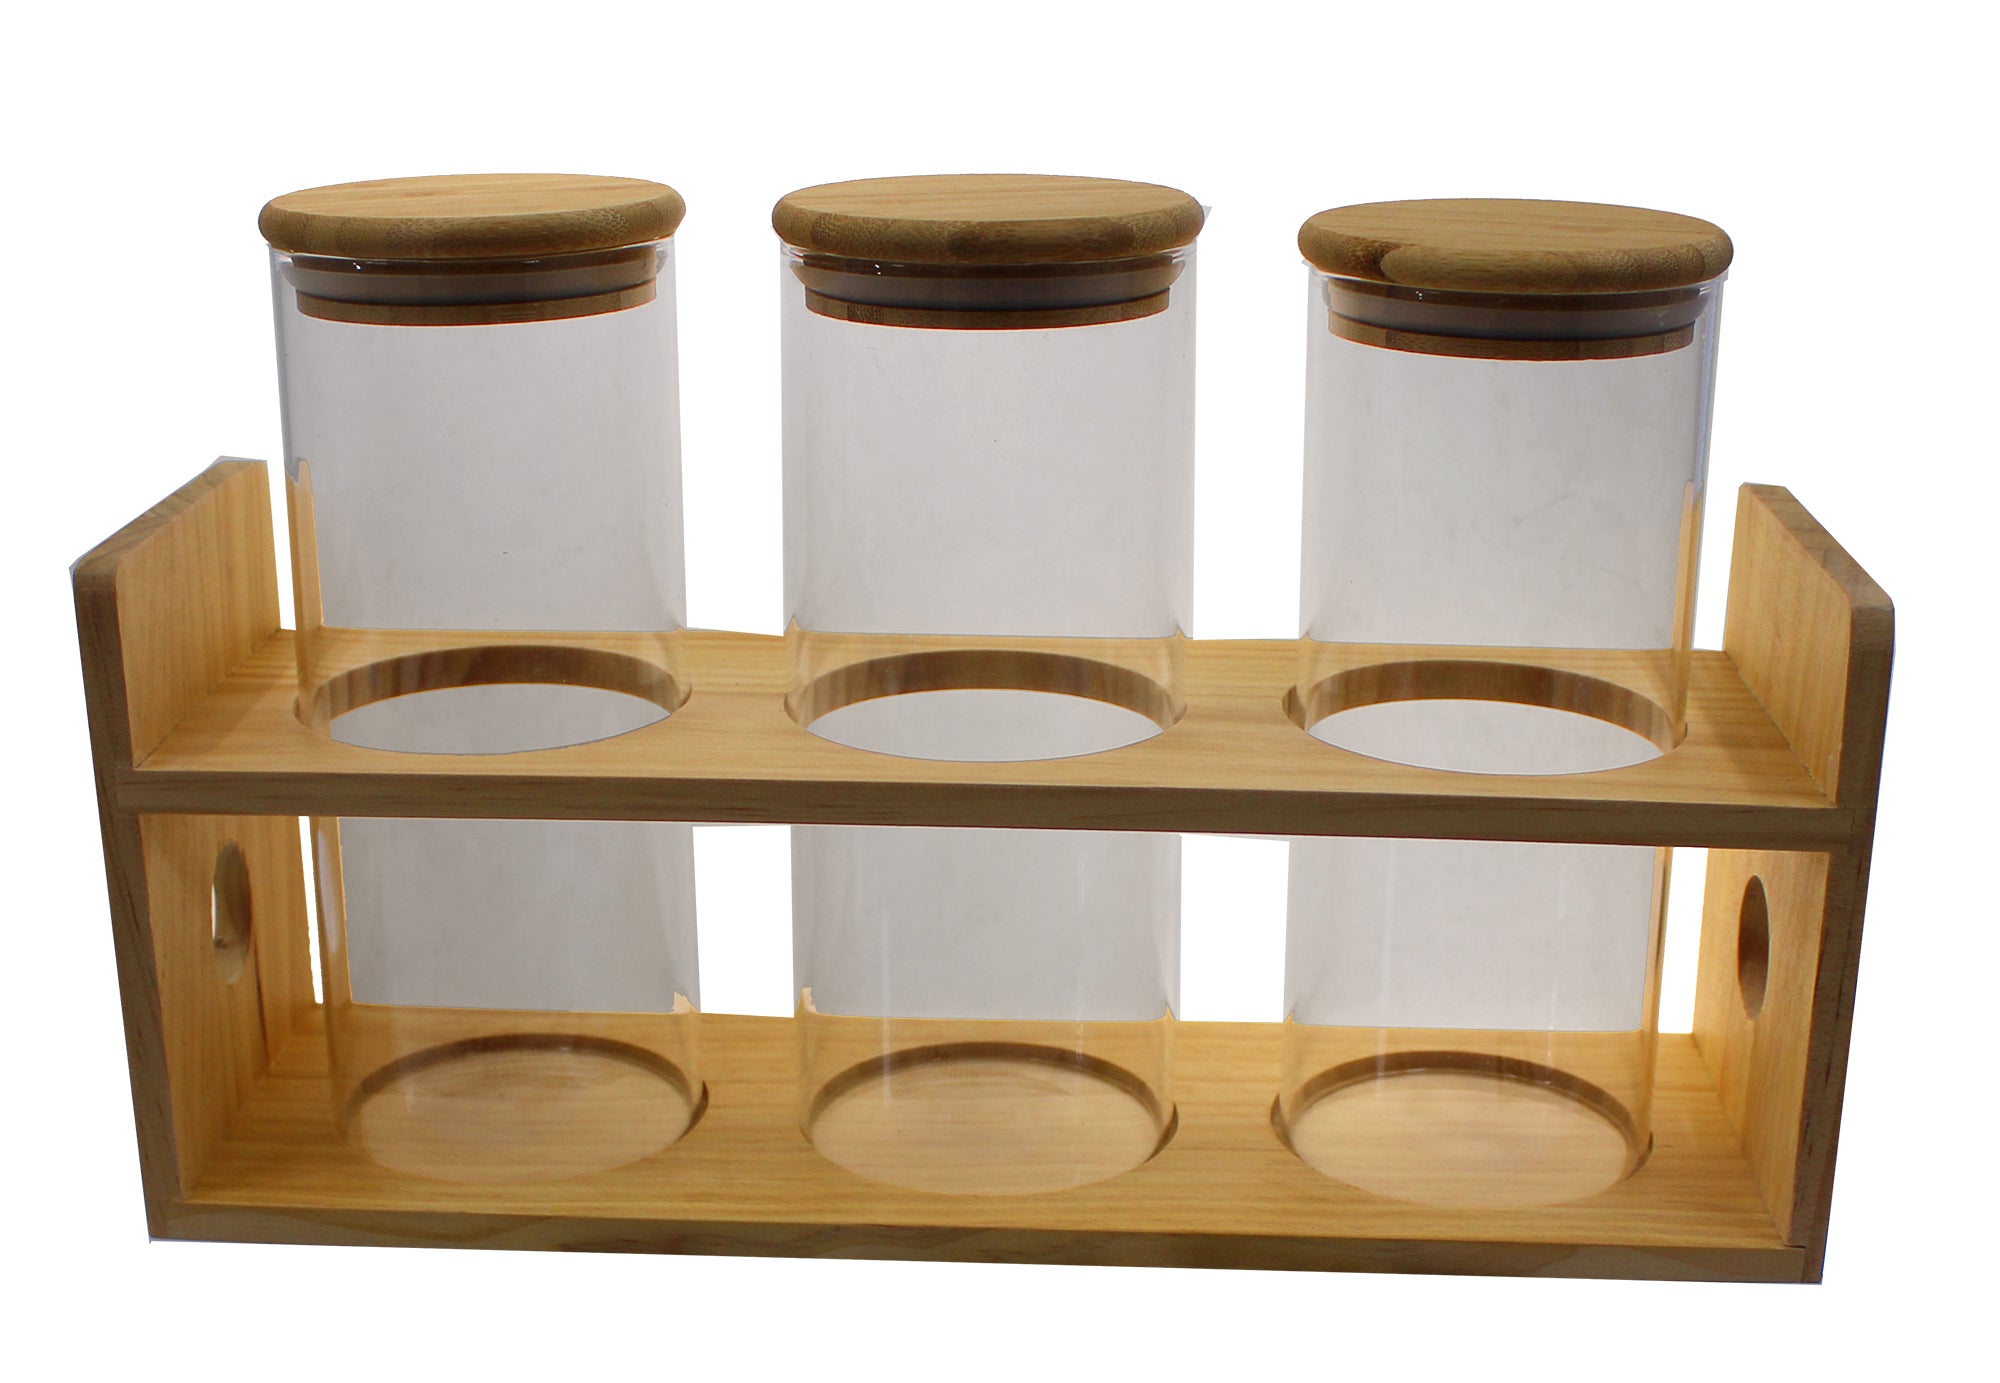 4 Piece 1000ml Glass Jar Spice Set with Bamboo Lids & Wooden Holder - Round